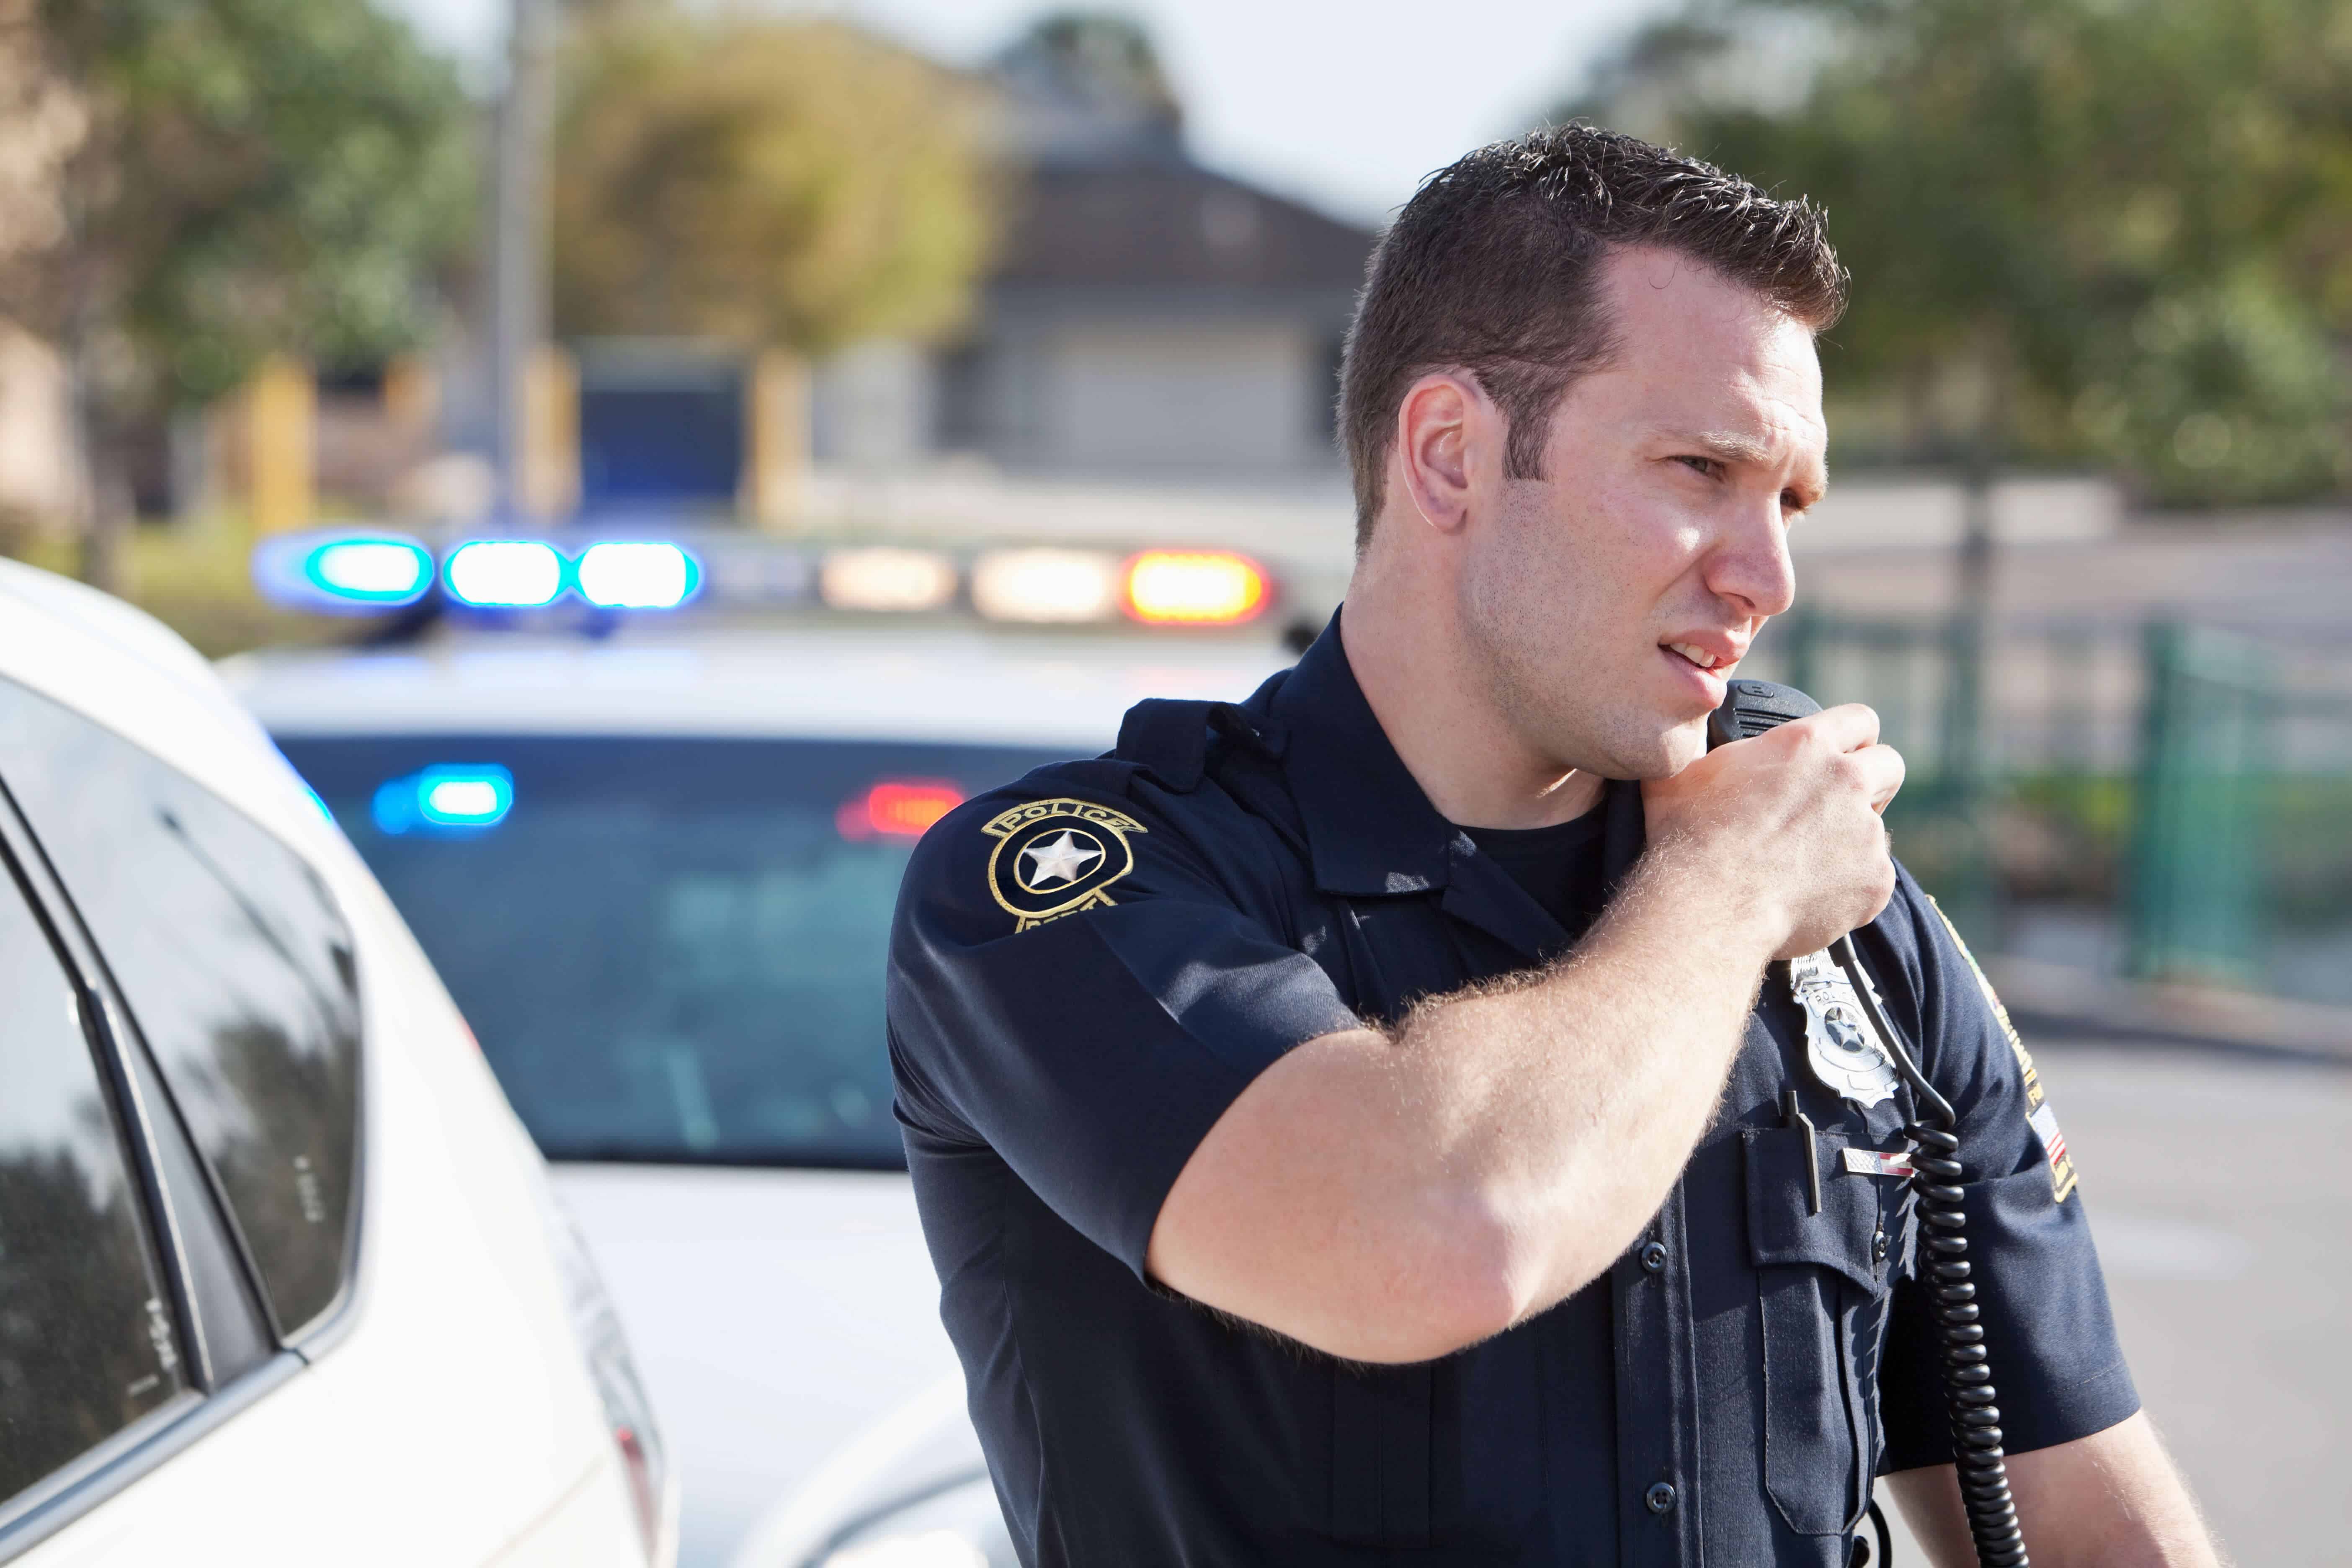 Police officer talking on radio